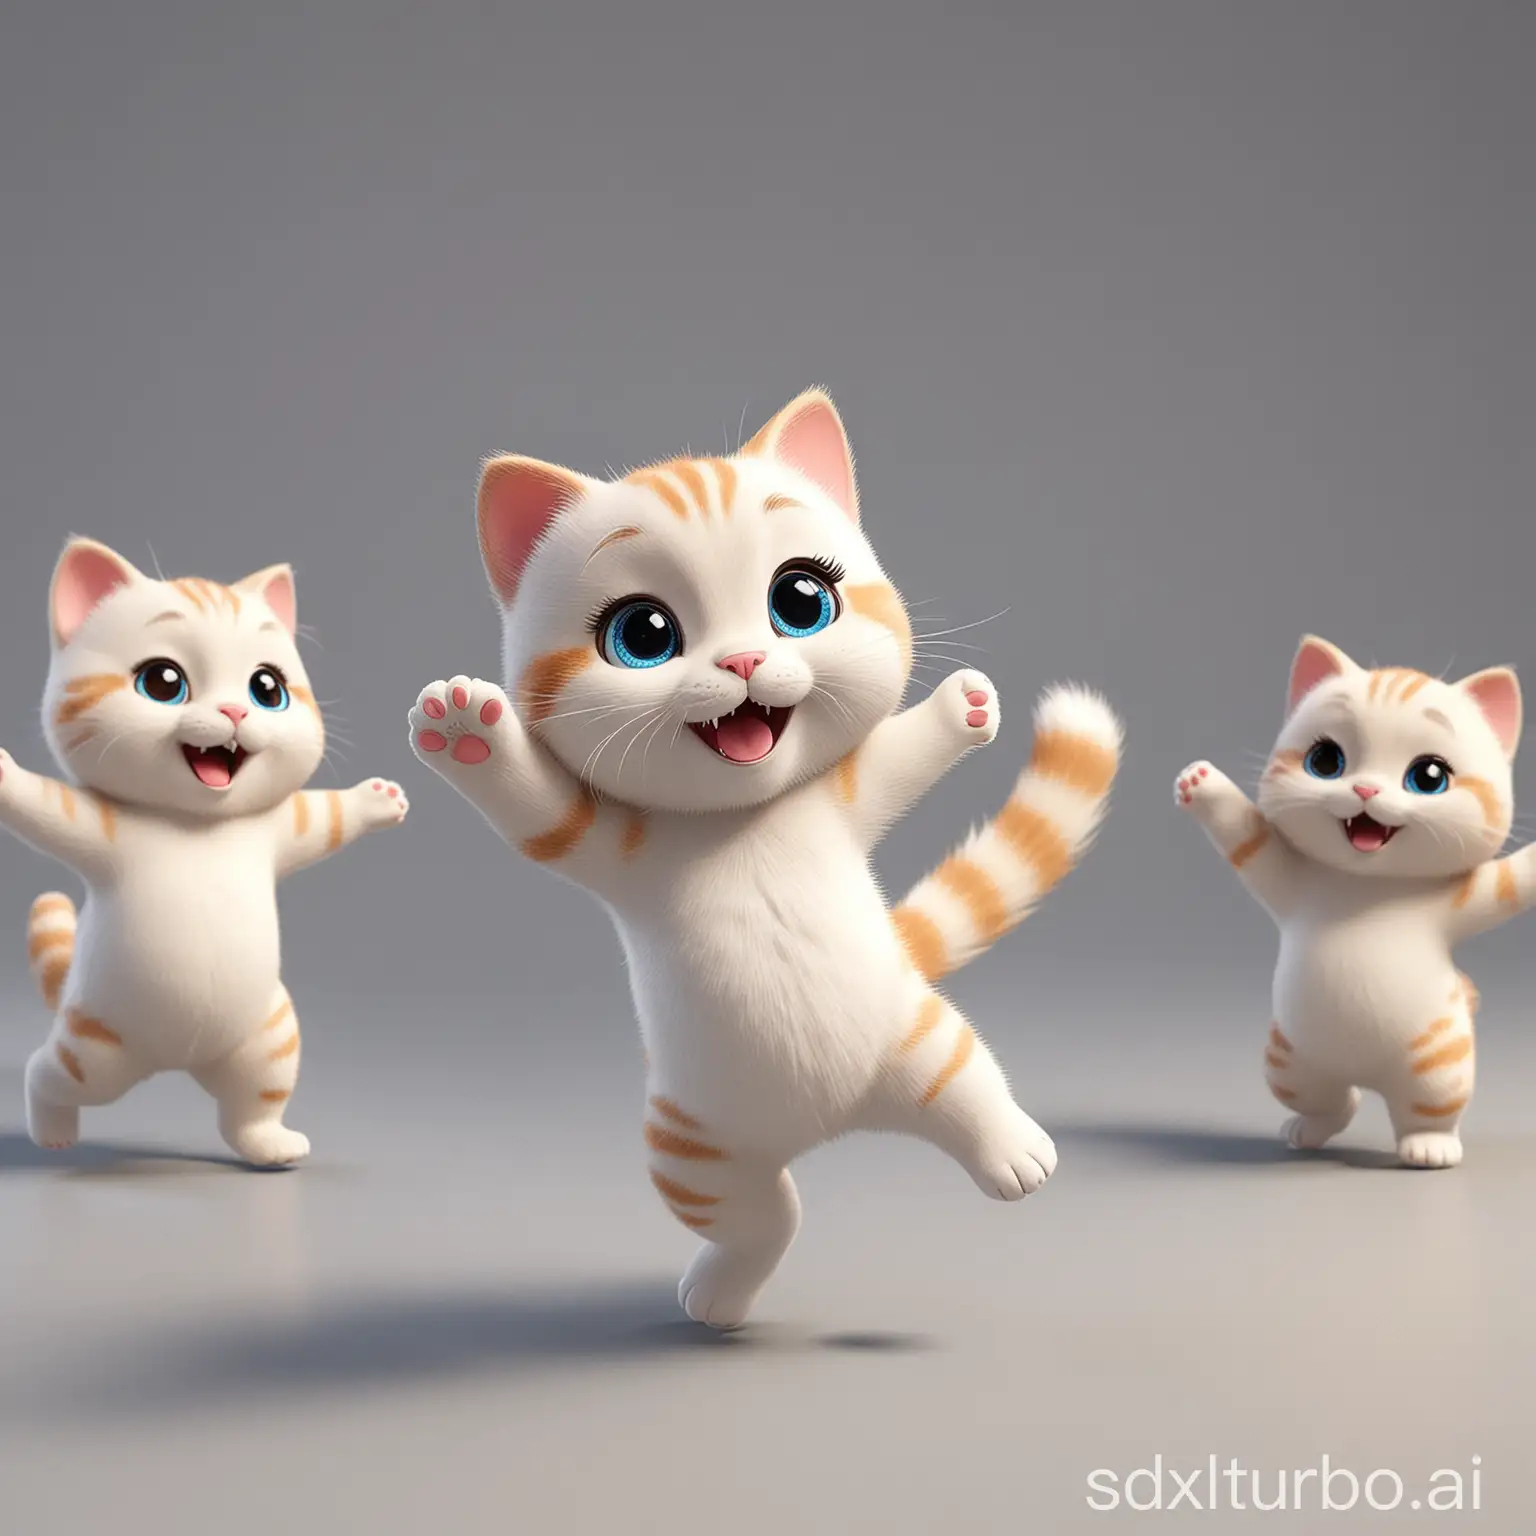 Joyful-3D-Dancing-Cat-Playful-Feline-Celebrating-with-Energetic-Moves